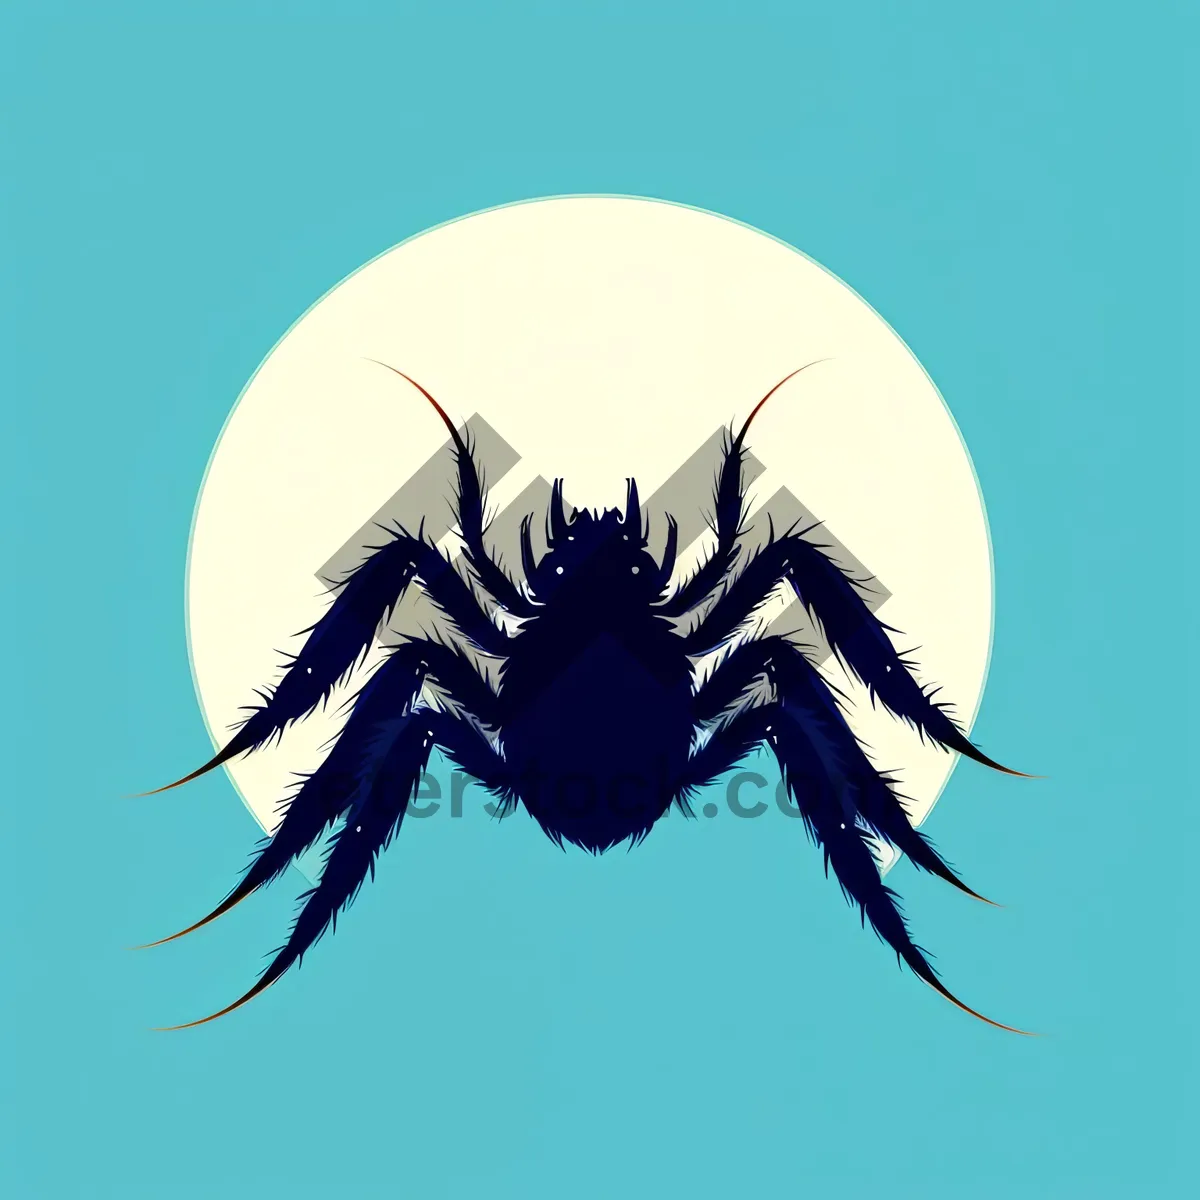 Picture of Black Barn Spider - Invertebrate Arachnid Image